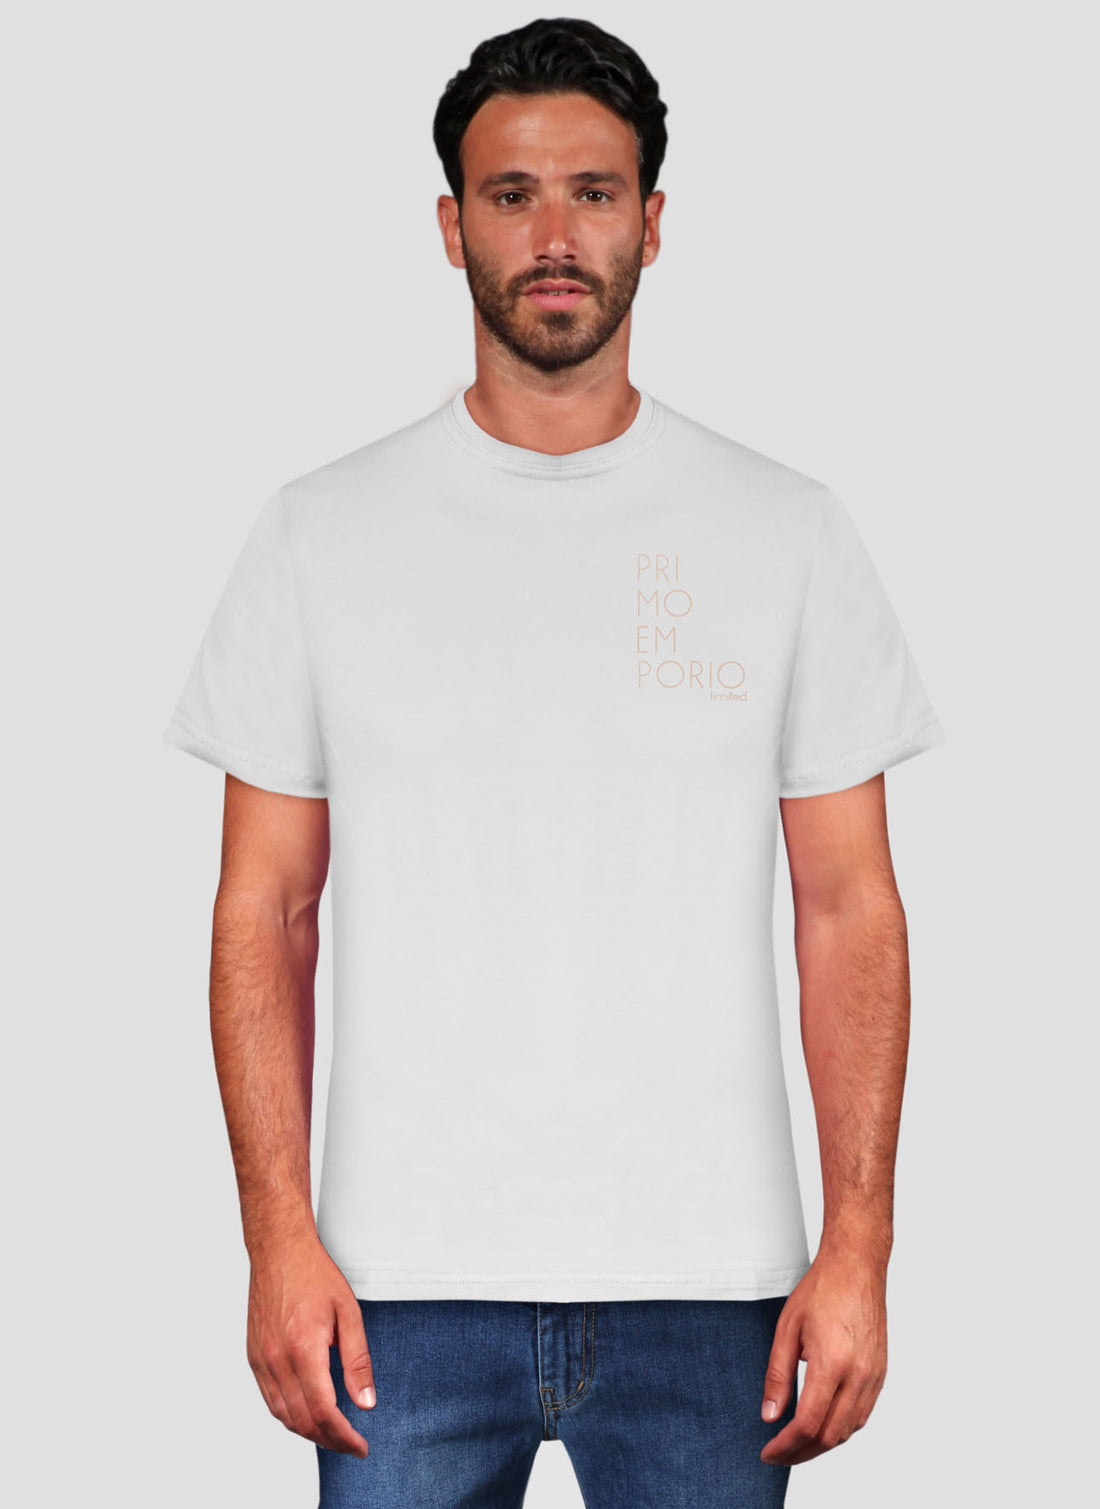 Elastic T-Shirt with Primo Emporio Chest Print - White